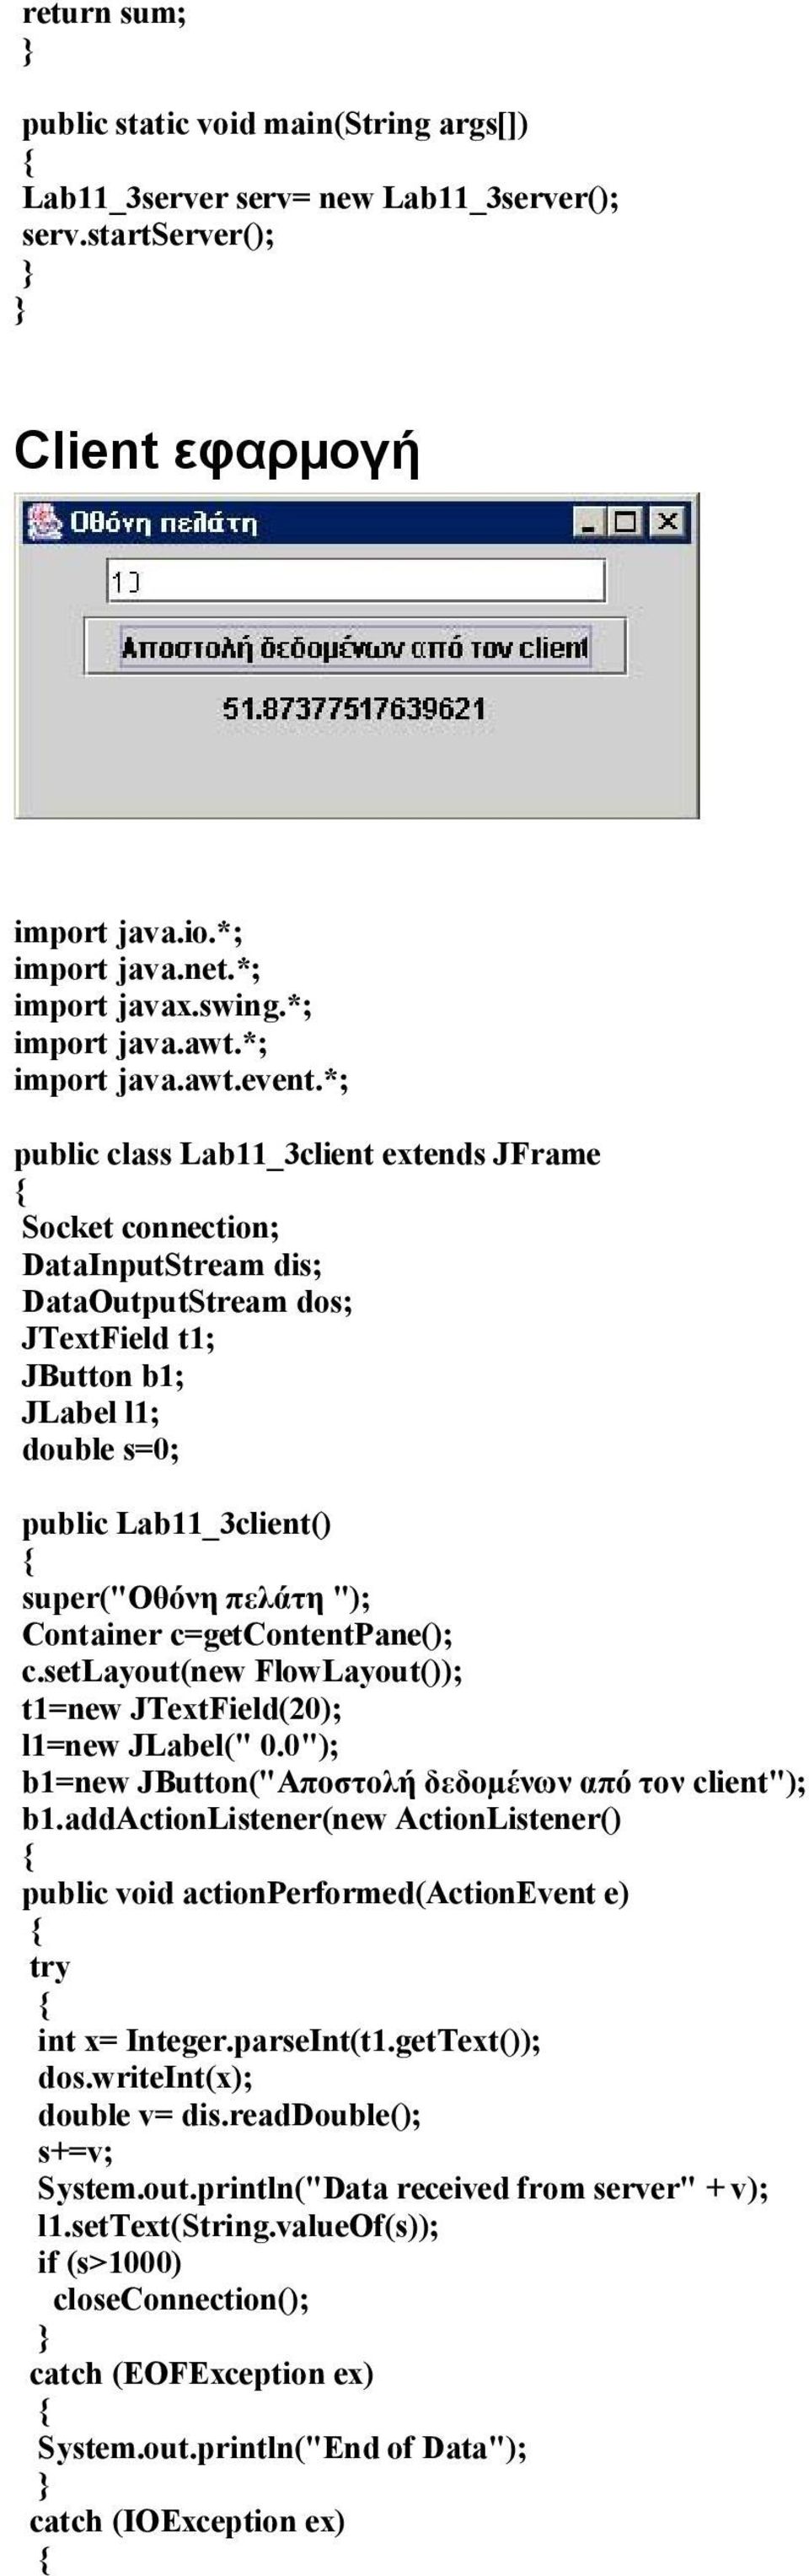 "); Container c=getcontentpane(); c.setlayout(new FlowLayout()); t1=new JTextField(20); l1=new JLabel(" 0.0"); b1=new JButton("Αποστολή δεδοµένων από τον client"); b1.